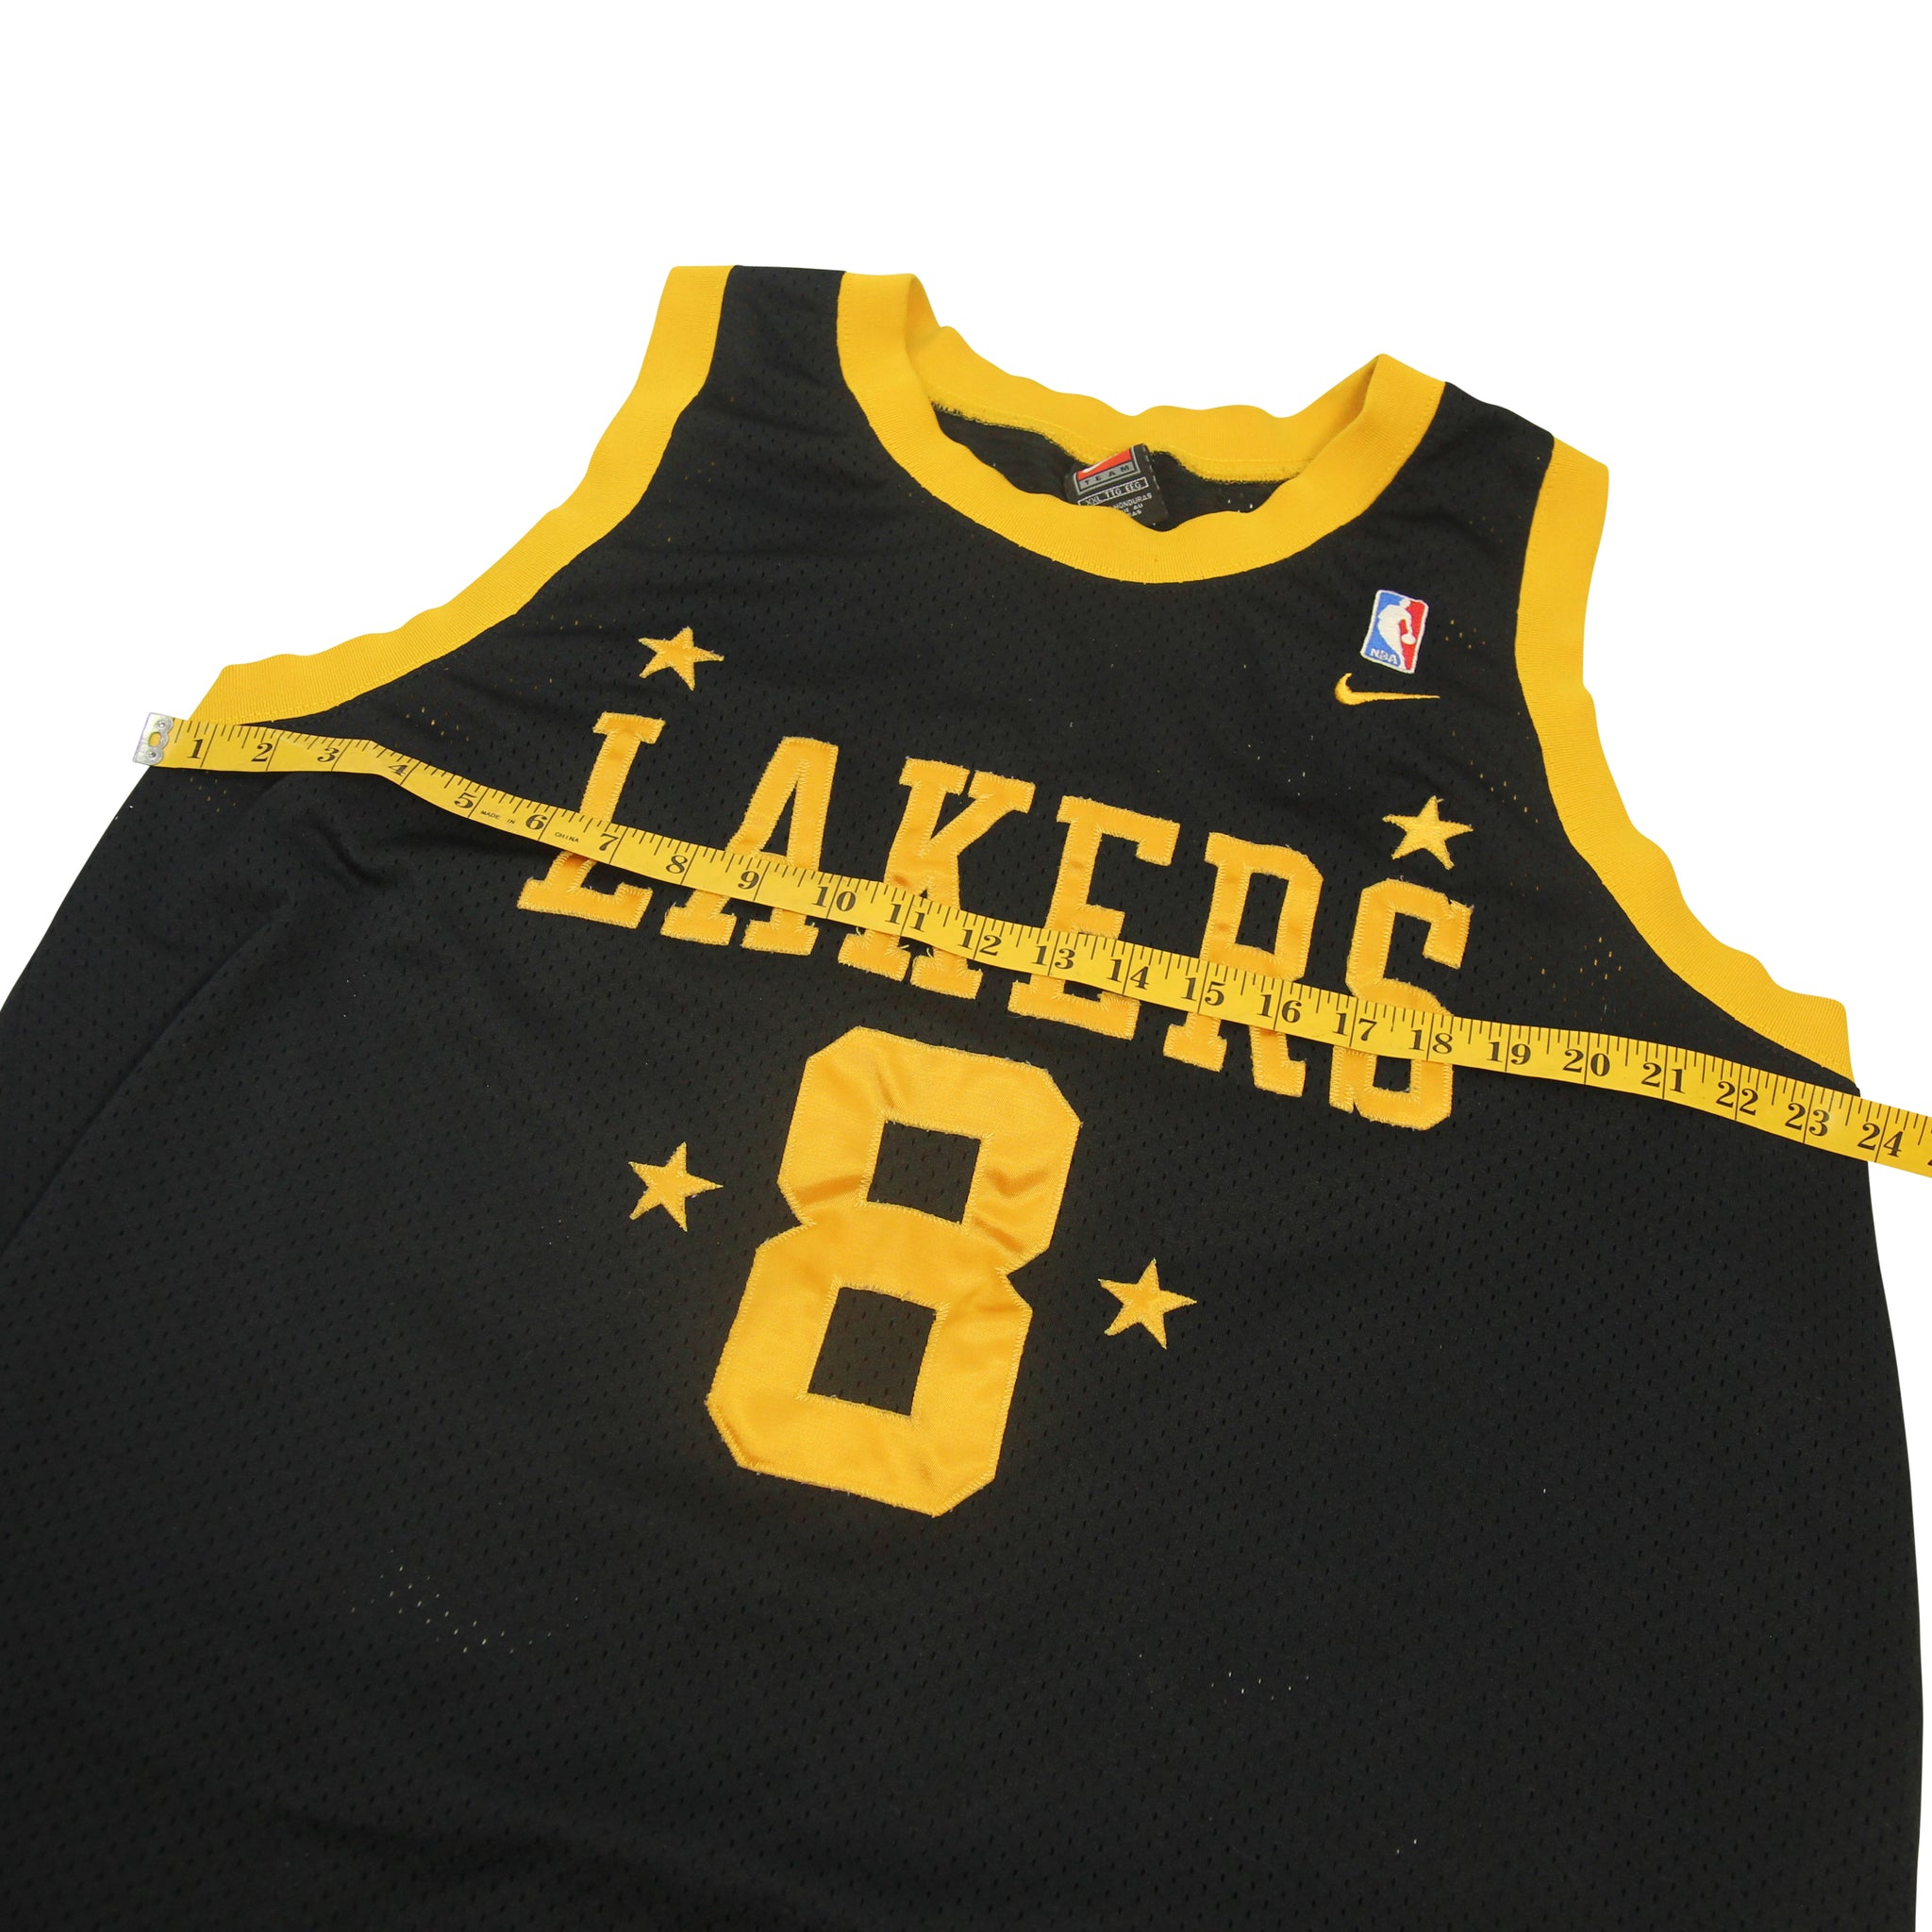 Nike Los Angeles Lakers Black NBA Jersey #8 Kobe Bryant Gold Star